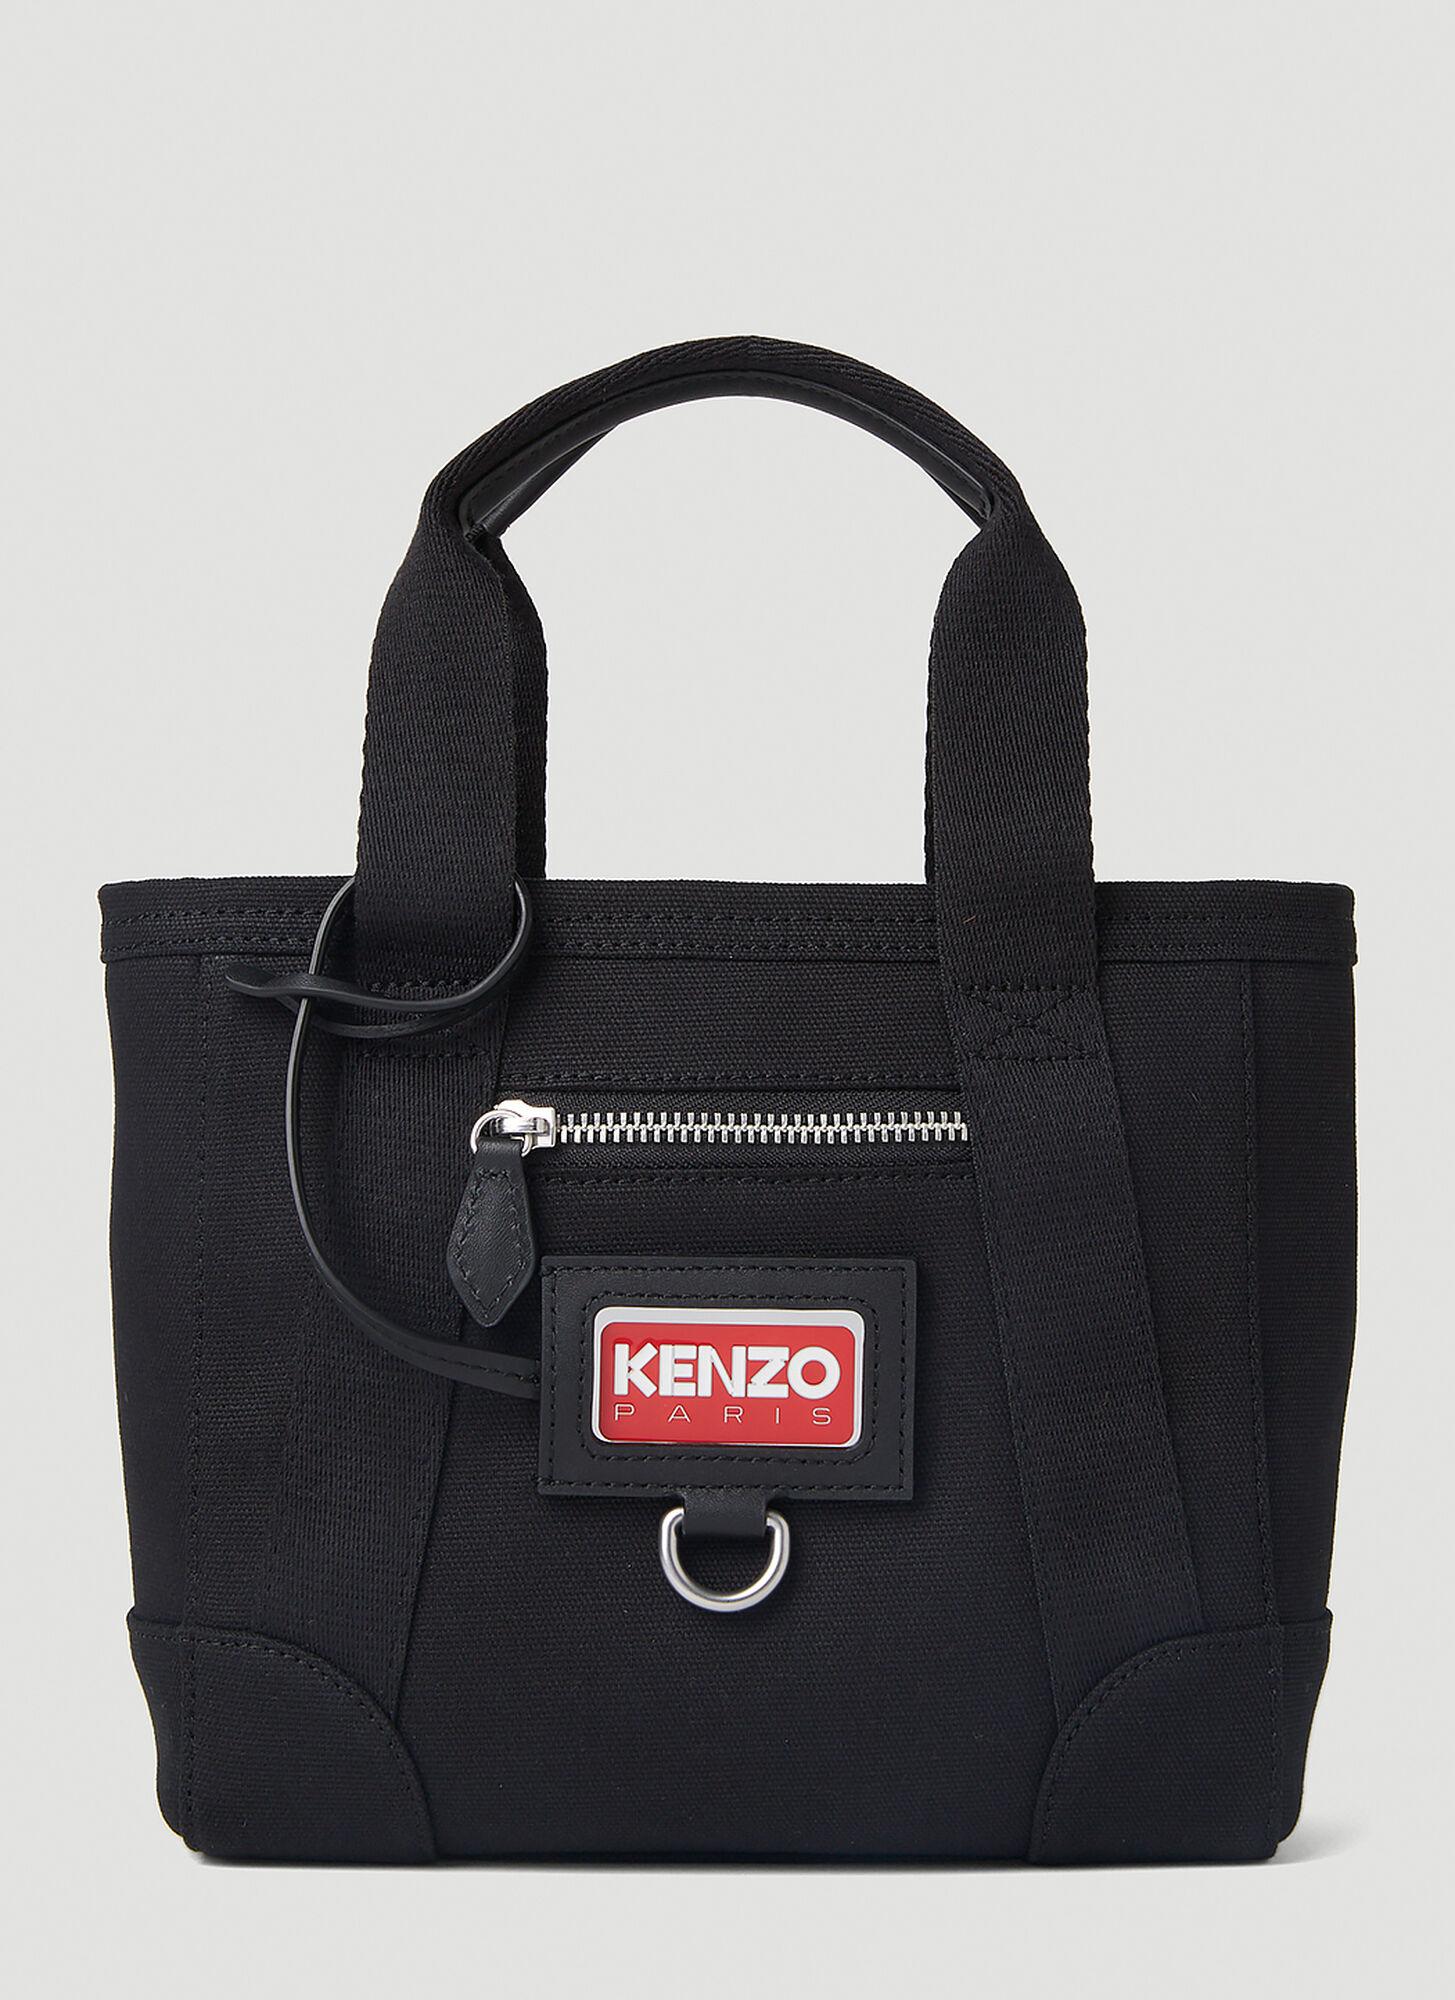 KENZO Mini Tote Bag in Black | Lyst